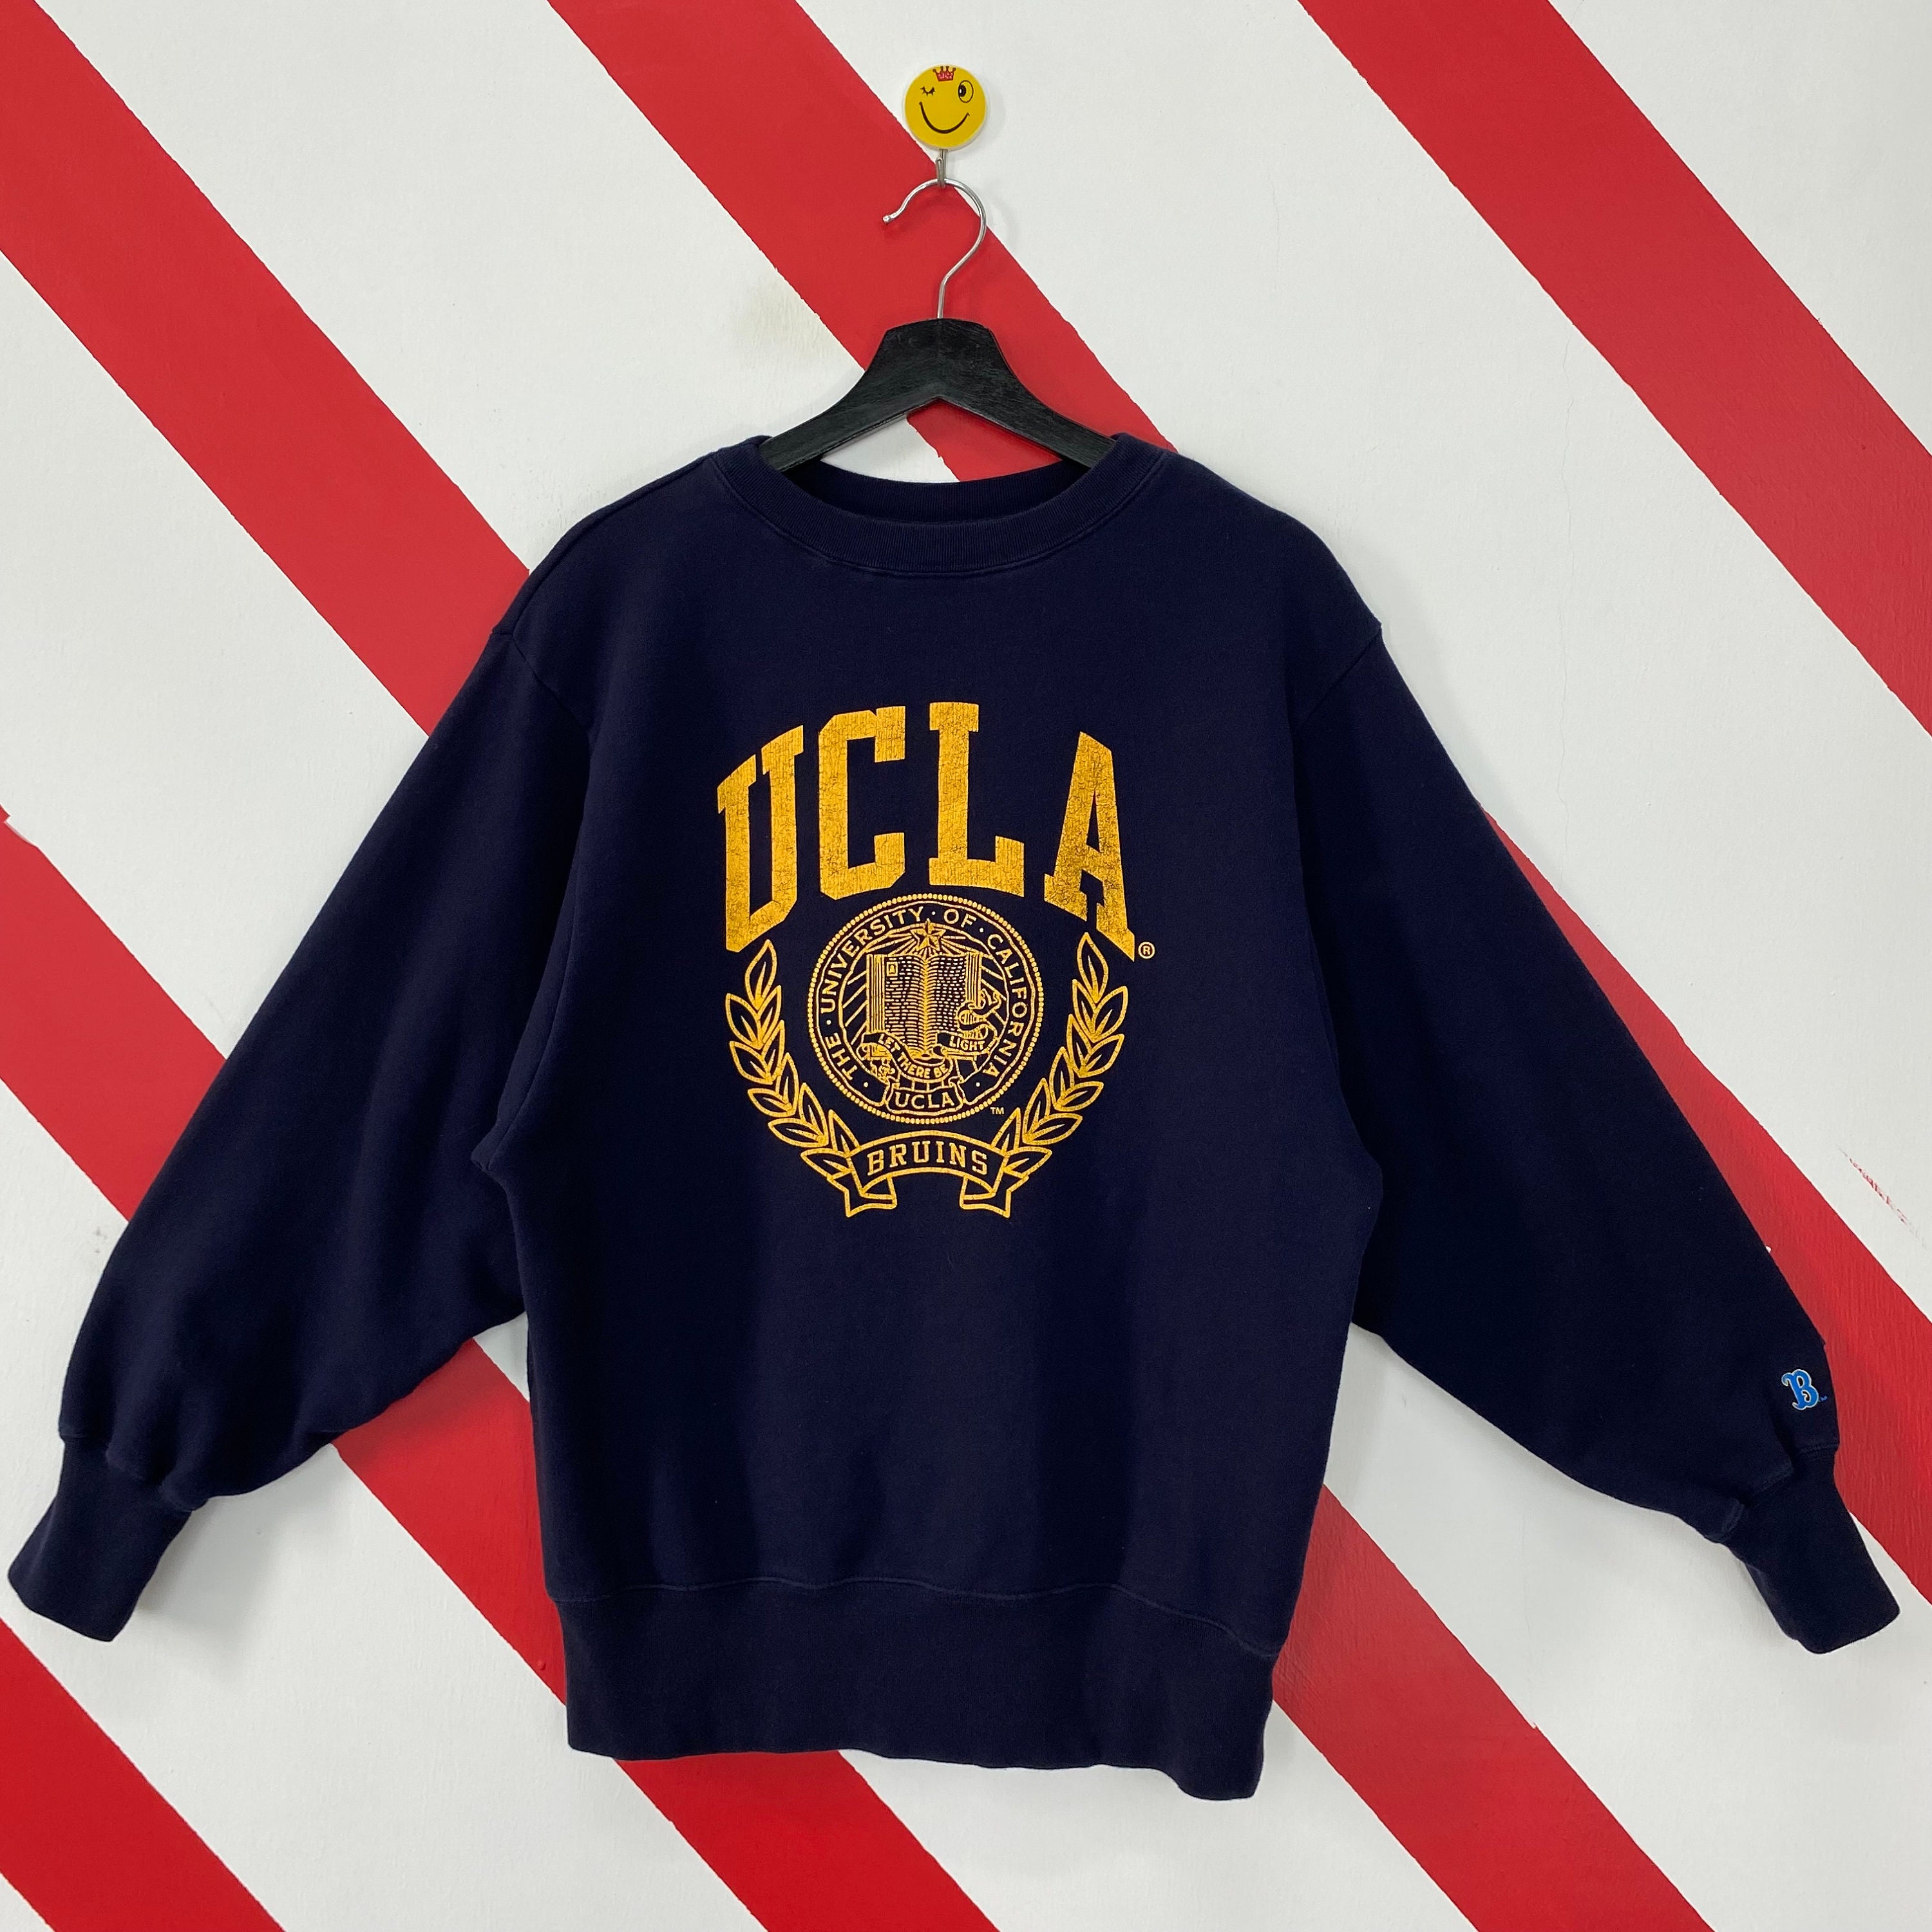  UCLA Bruins 1919 Vintage Sweatshirt : Sports & Outdoors